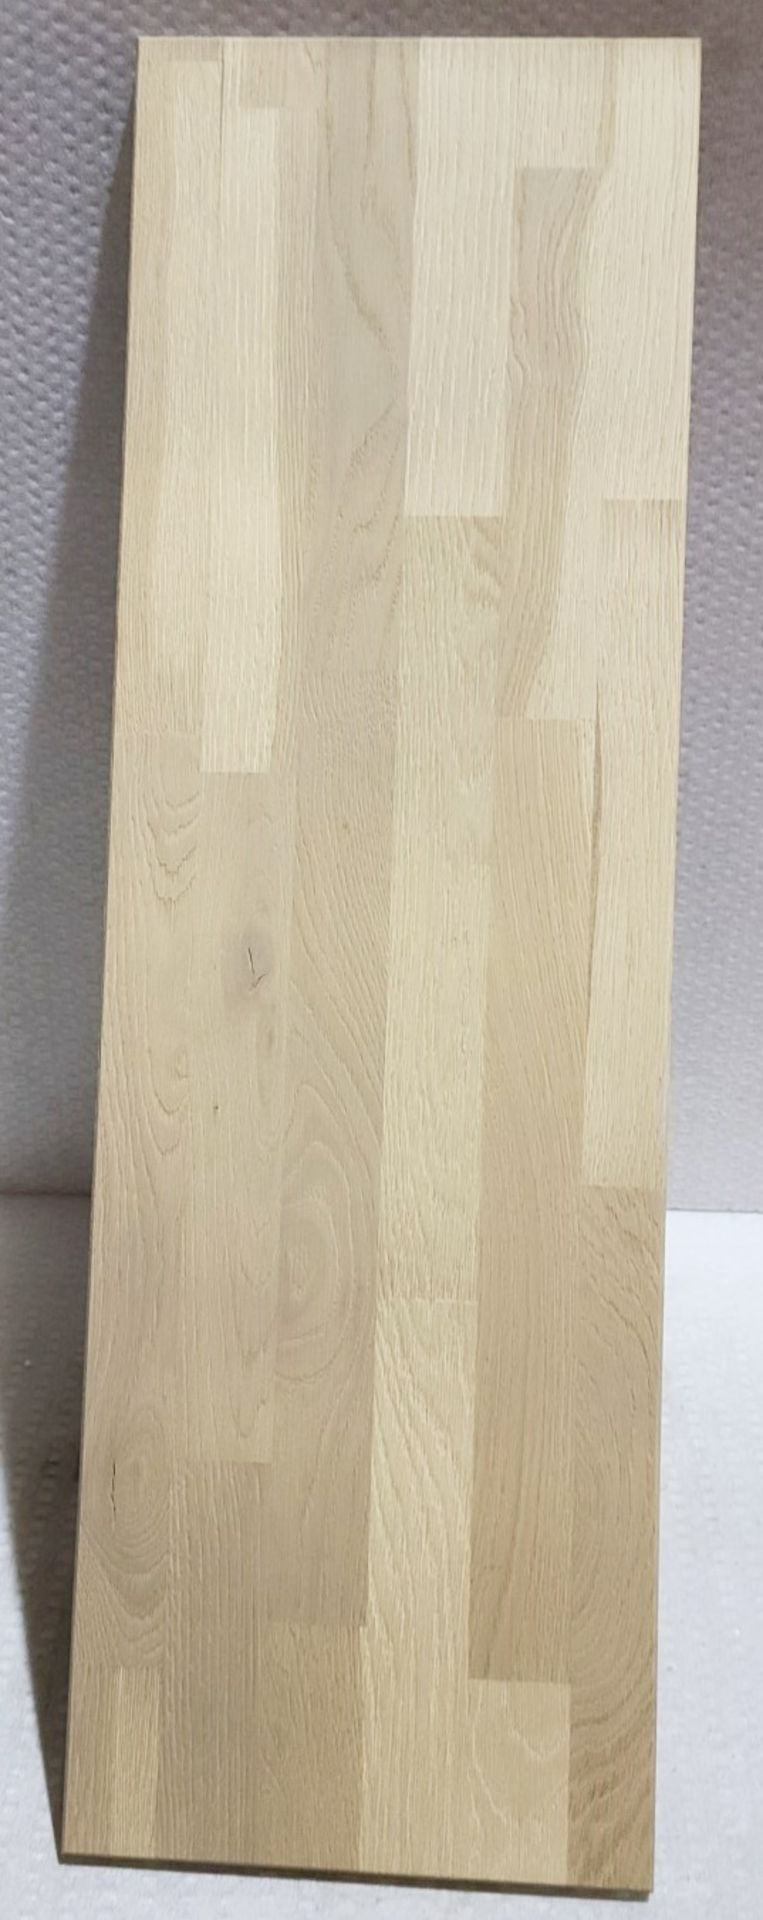 1 x WOOOD 'Gyan Legplank' Light Oak Shelf With Black Metal Braces 80cm - Image 5 of 7